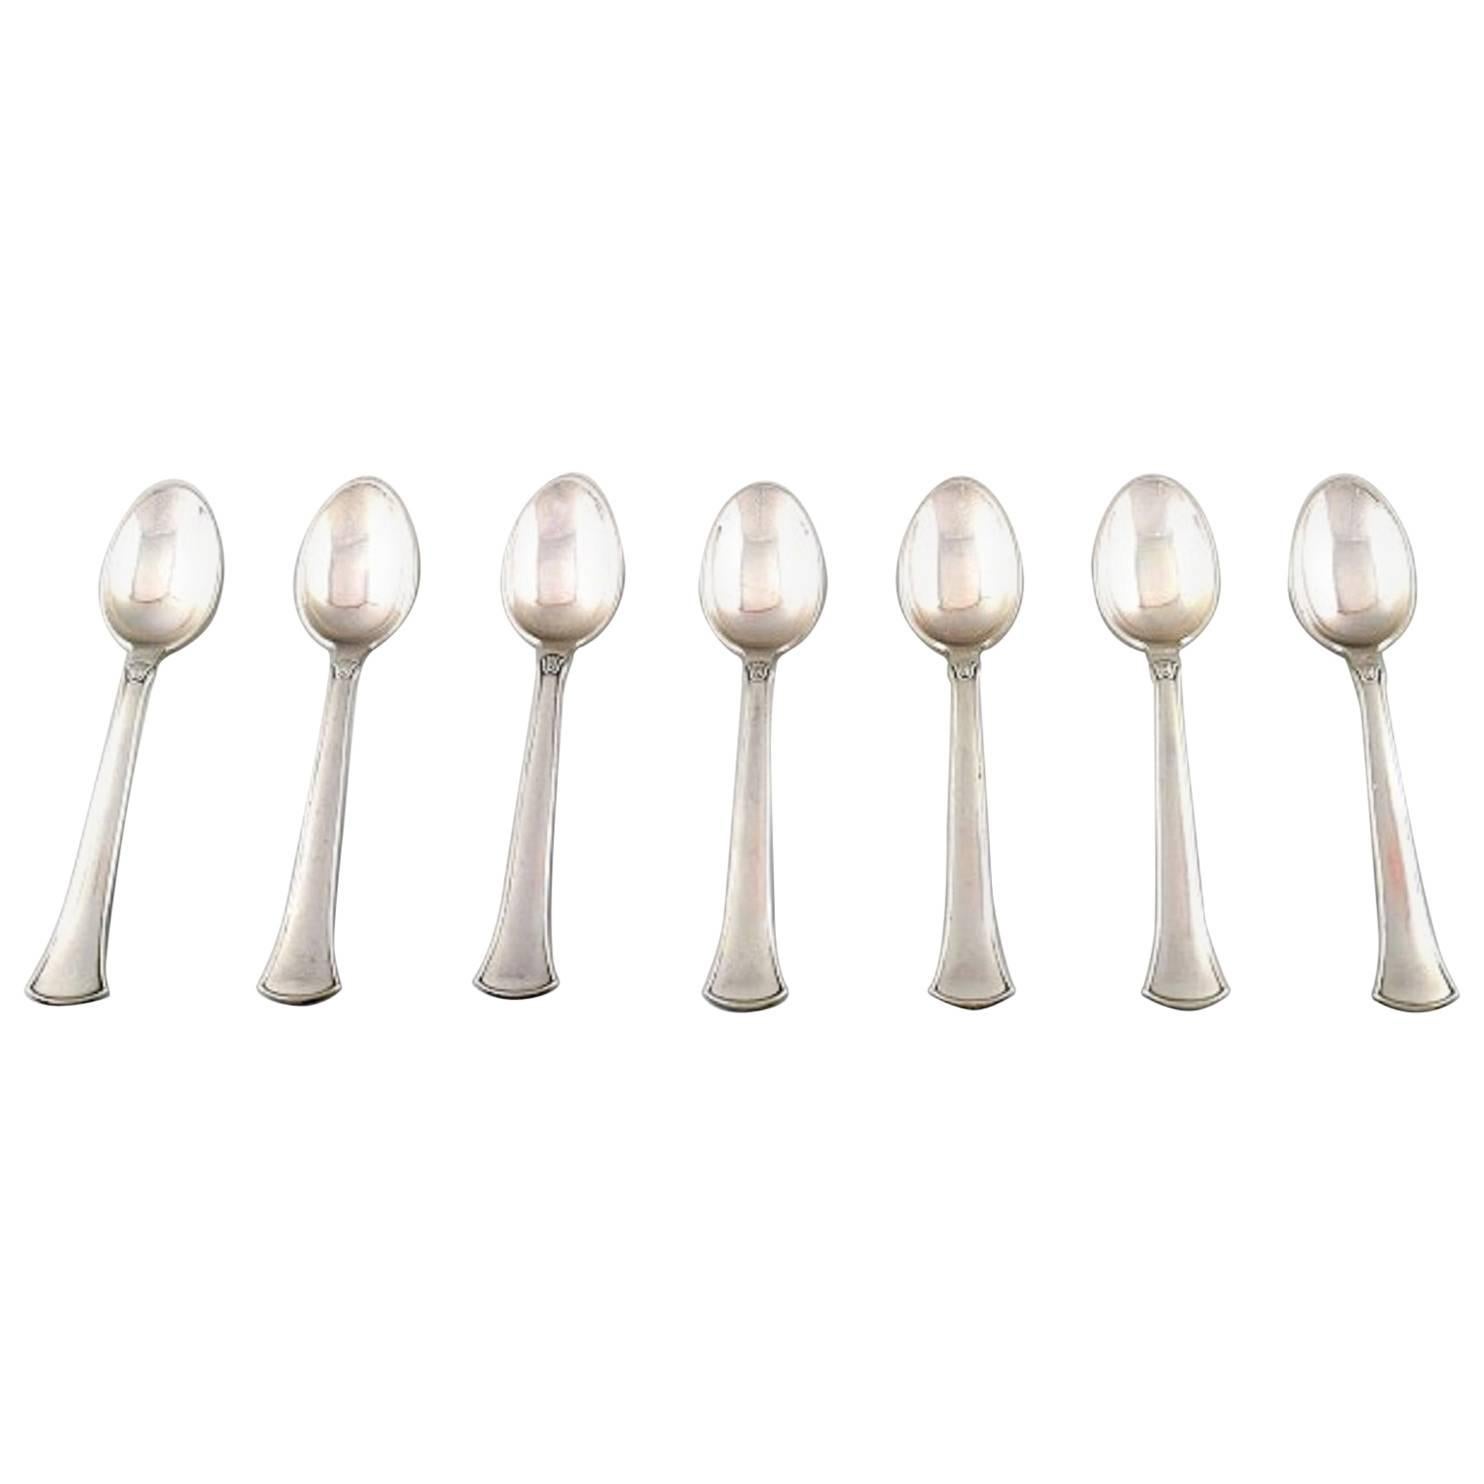 Hans Hansen Silverware Number 5, Seven Dessert Spoons in Sterling Silver